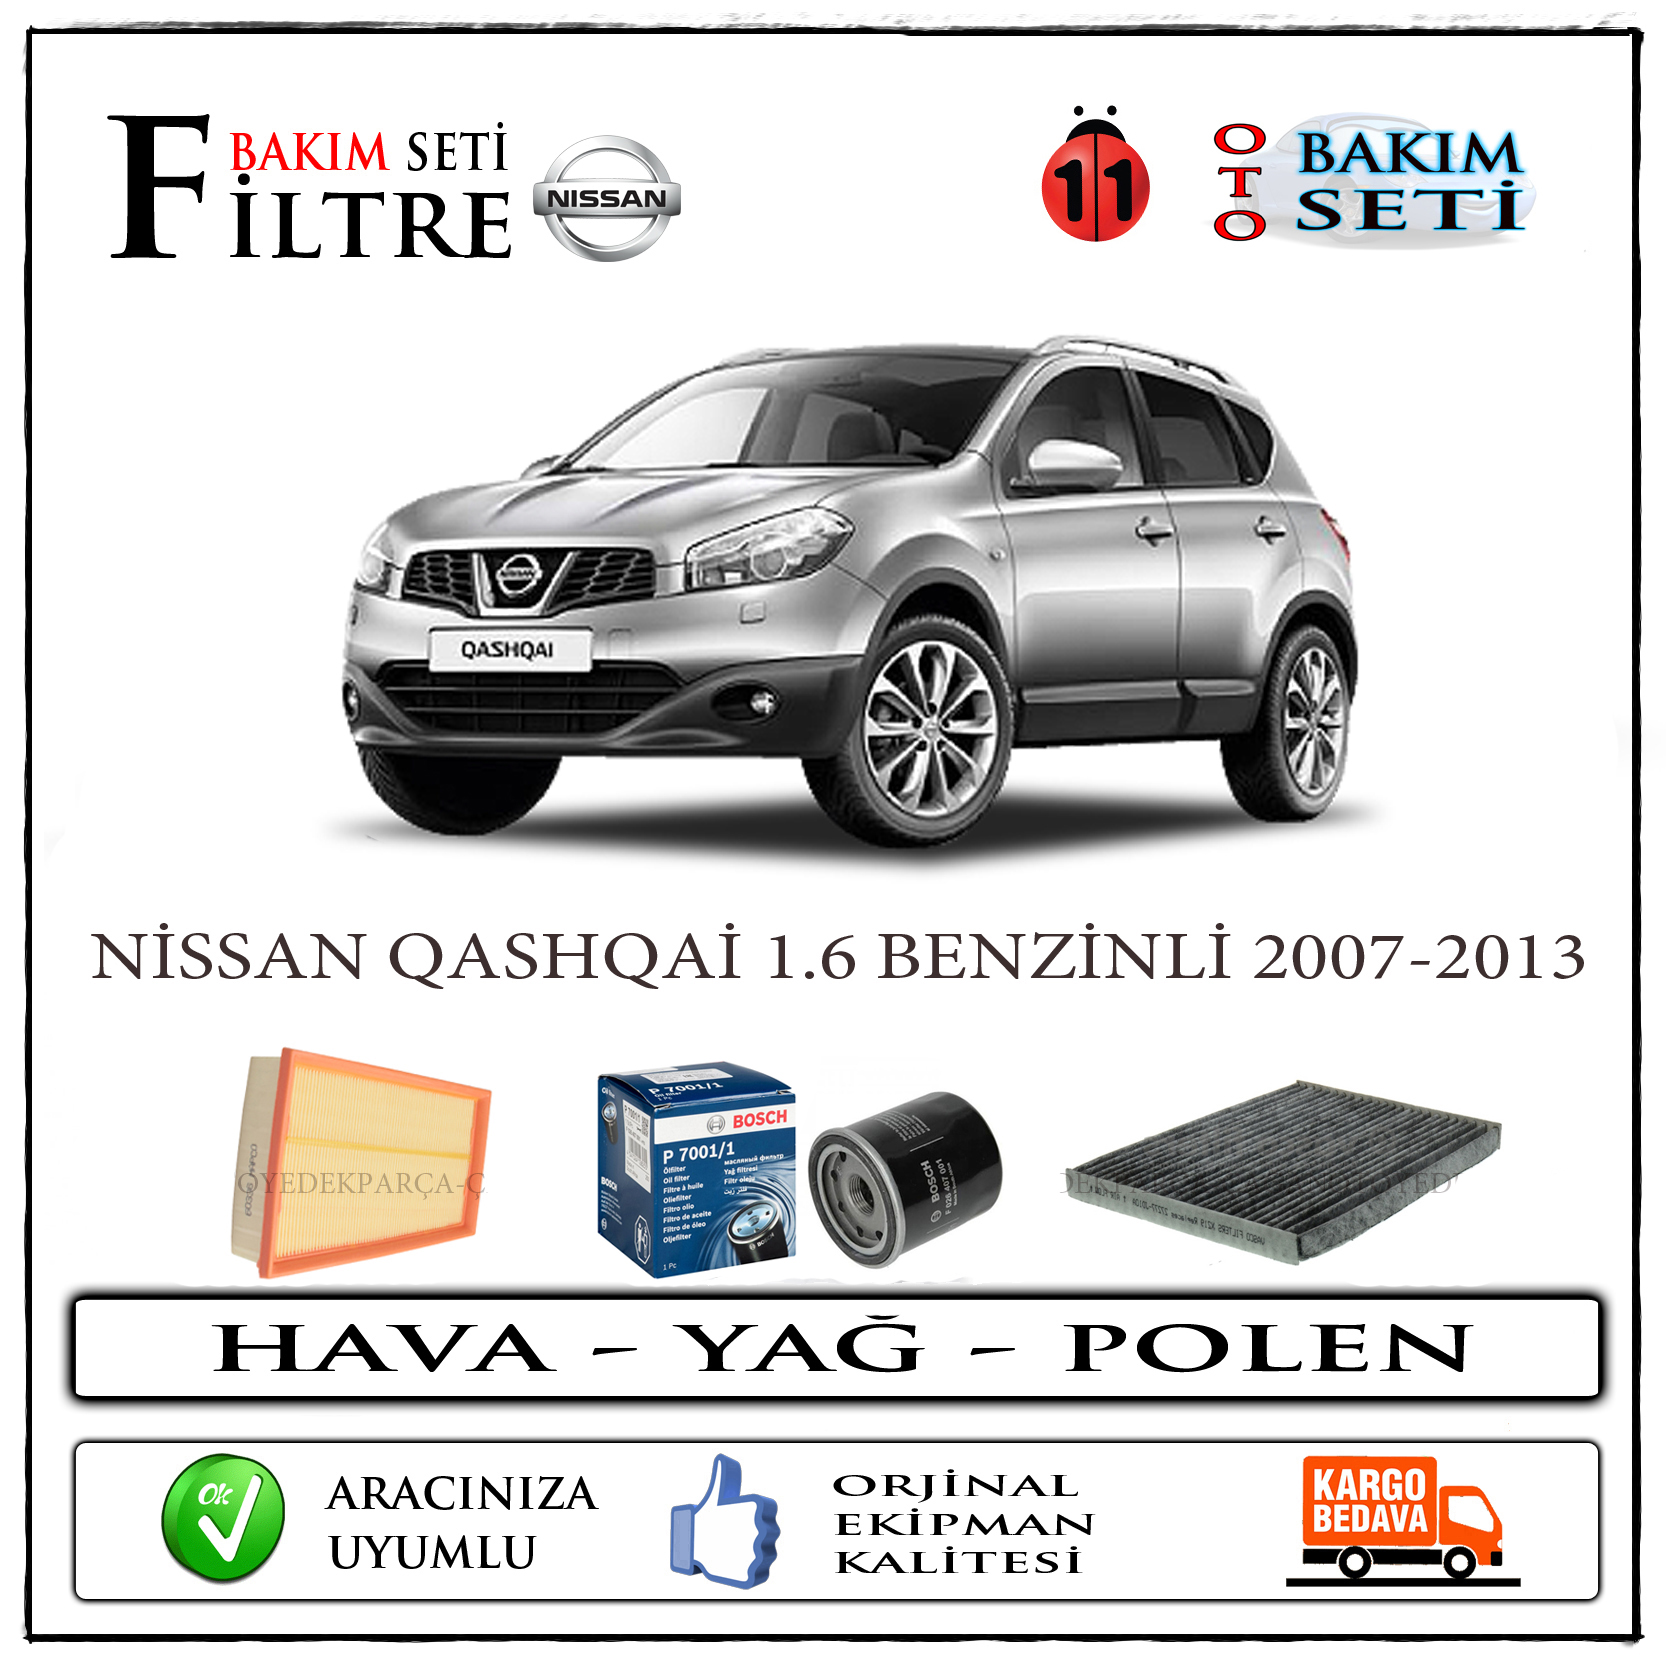 Nissan Qashqai 1.6 Benzinli Filtre Bakım Seti (2007-2013)